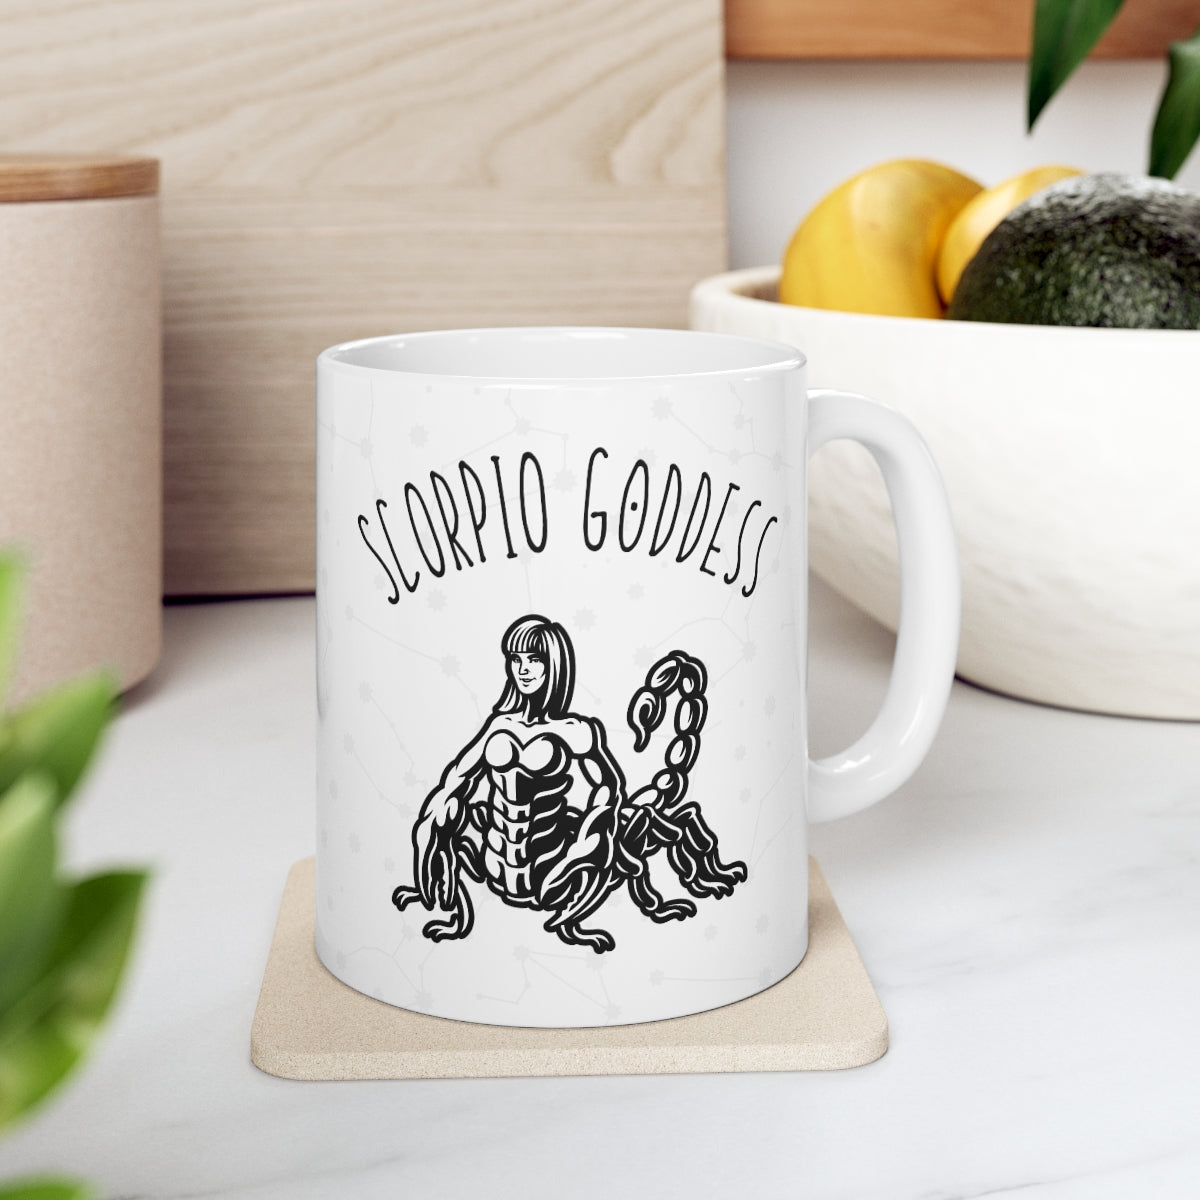 Scorpio Goddess Astrology Mug 6